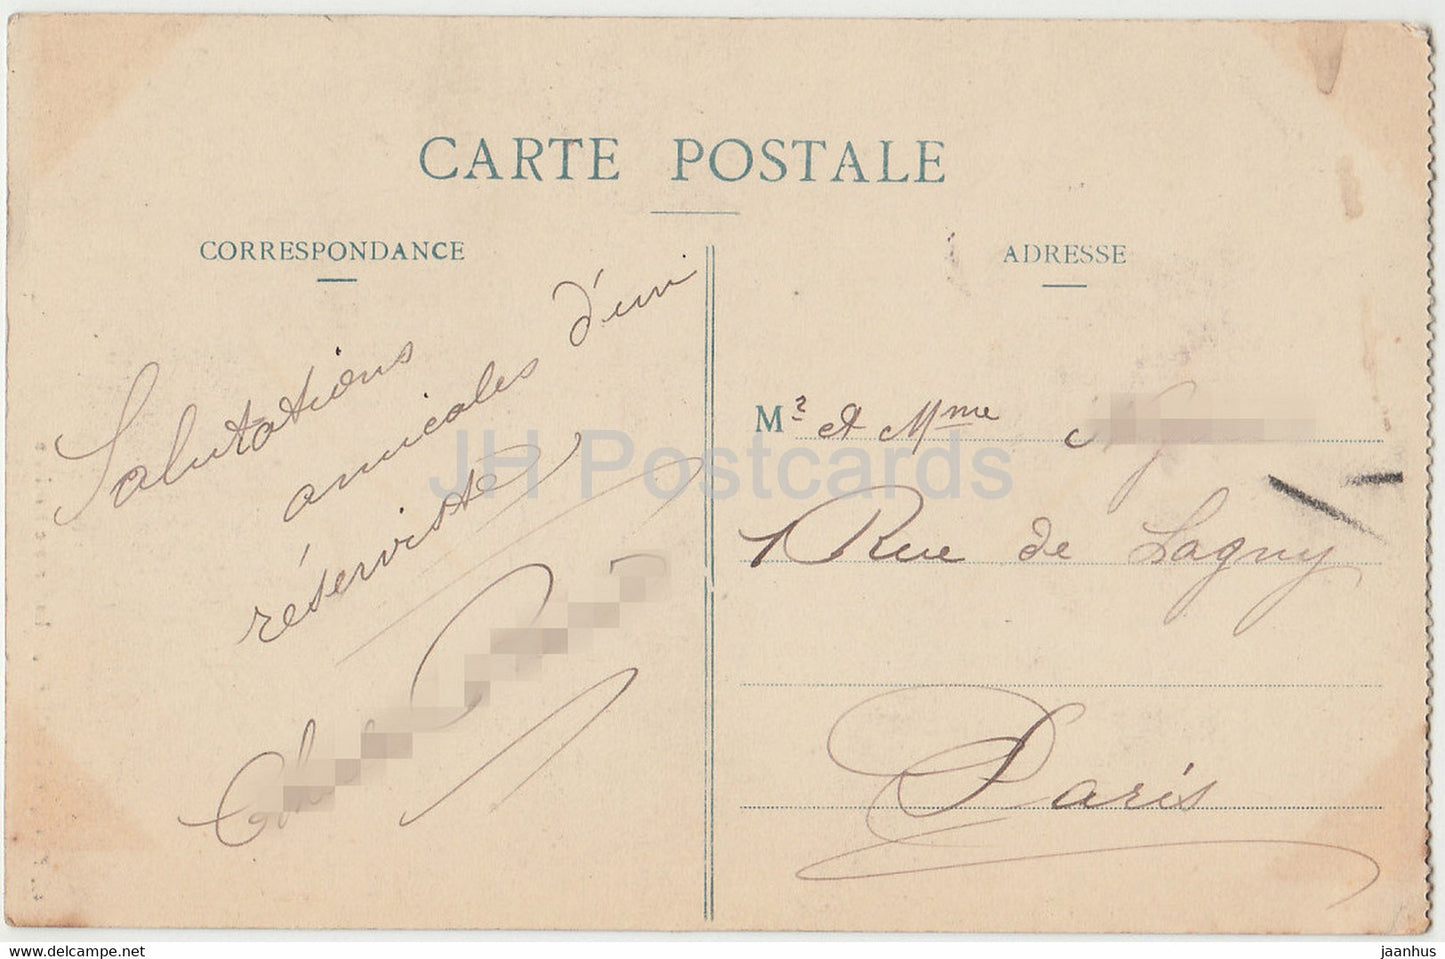 Rouen - La Grosse Horloge - horloge - 458 - carte postale ancienne - 1910 - France - occasion